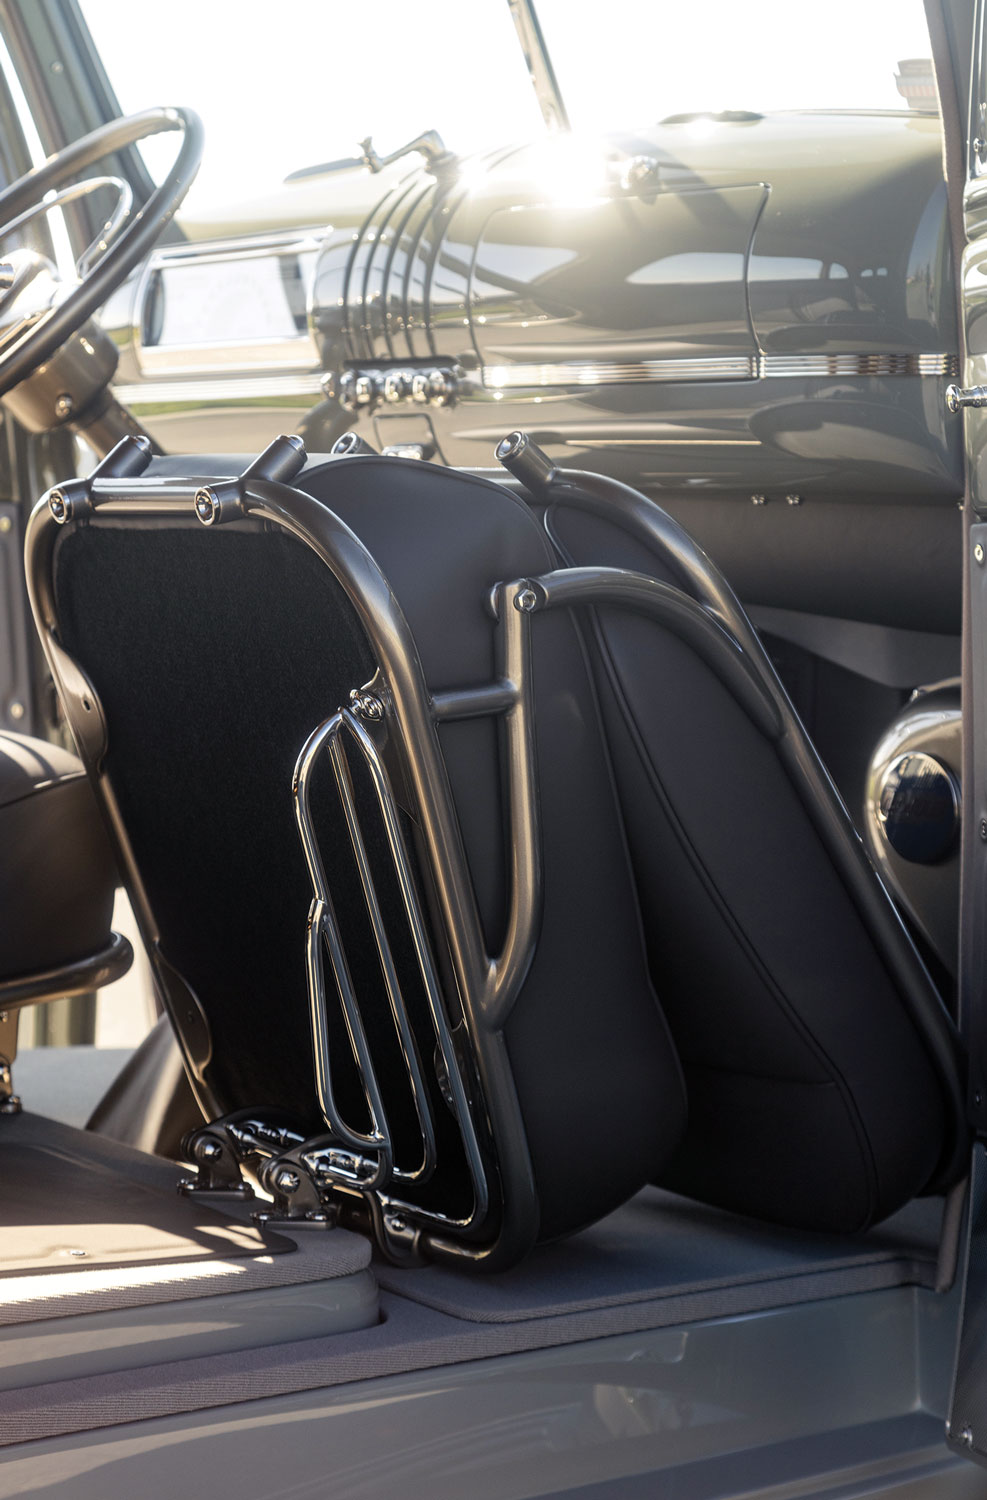 '40 Chevy suburban front passenger seat folded